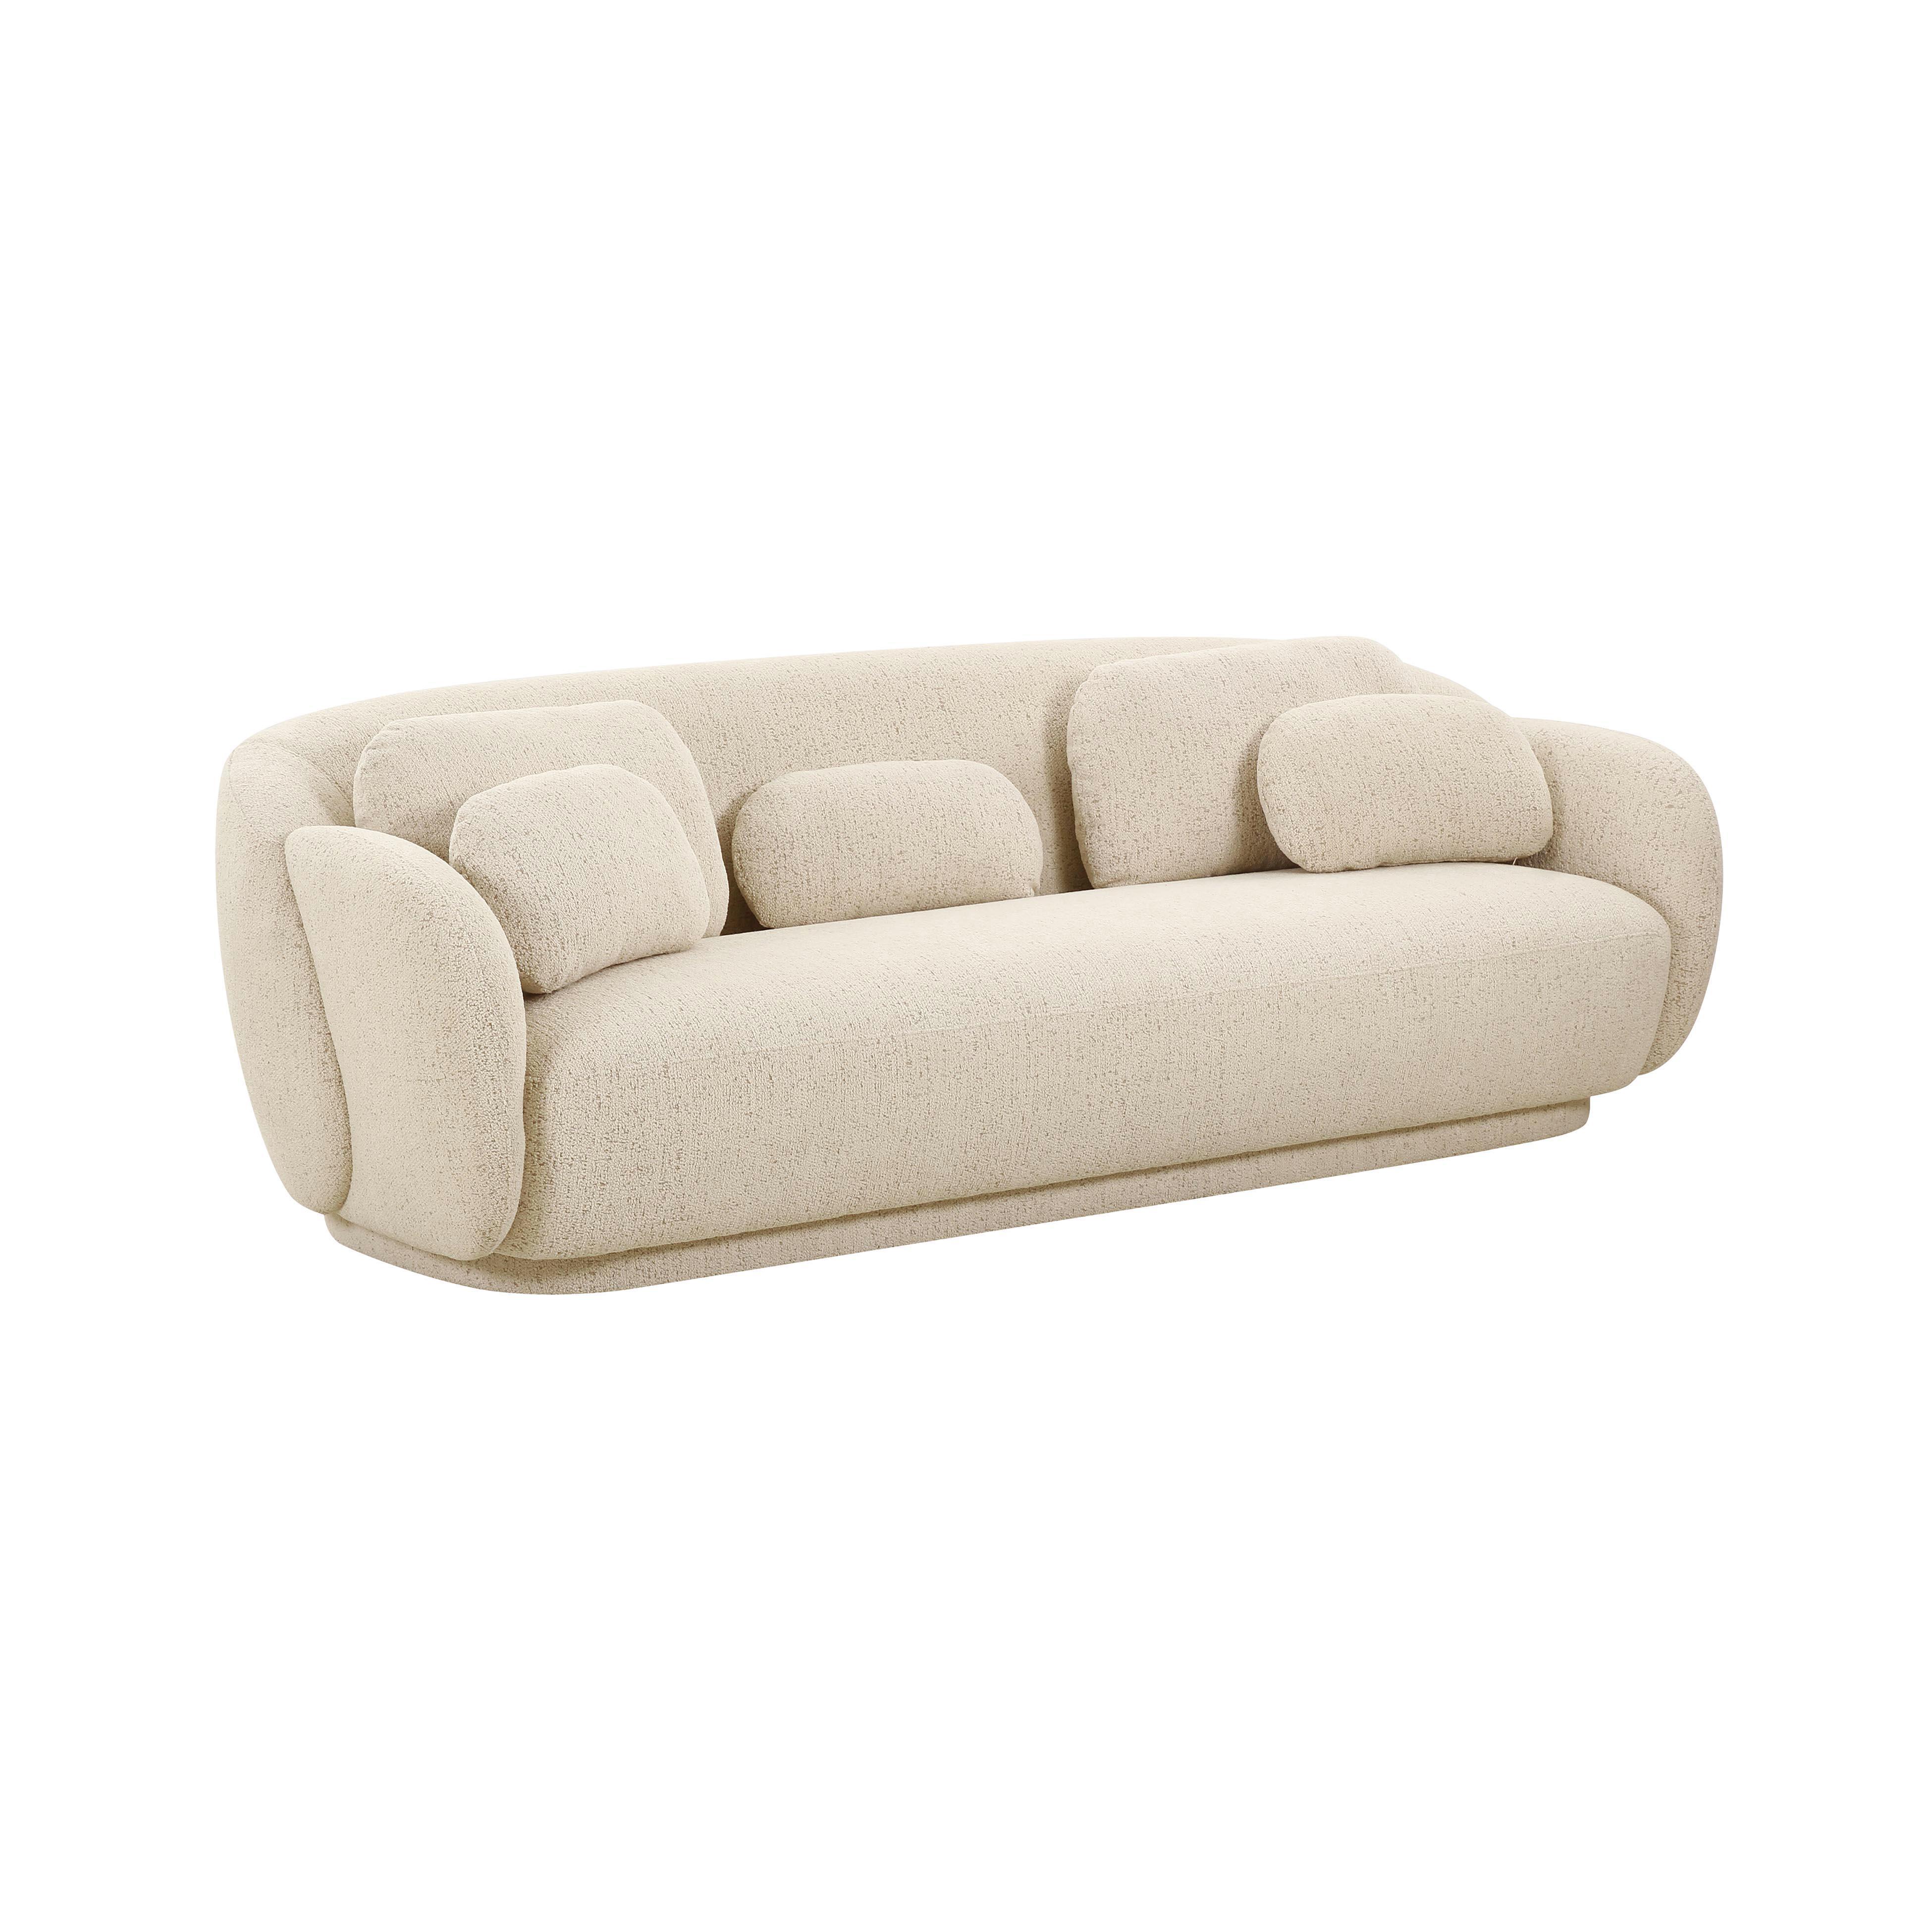 Tov Furniture Sofas - Misty Cream Boucle Sofa